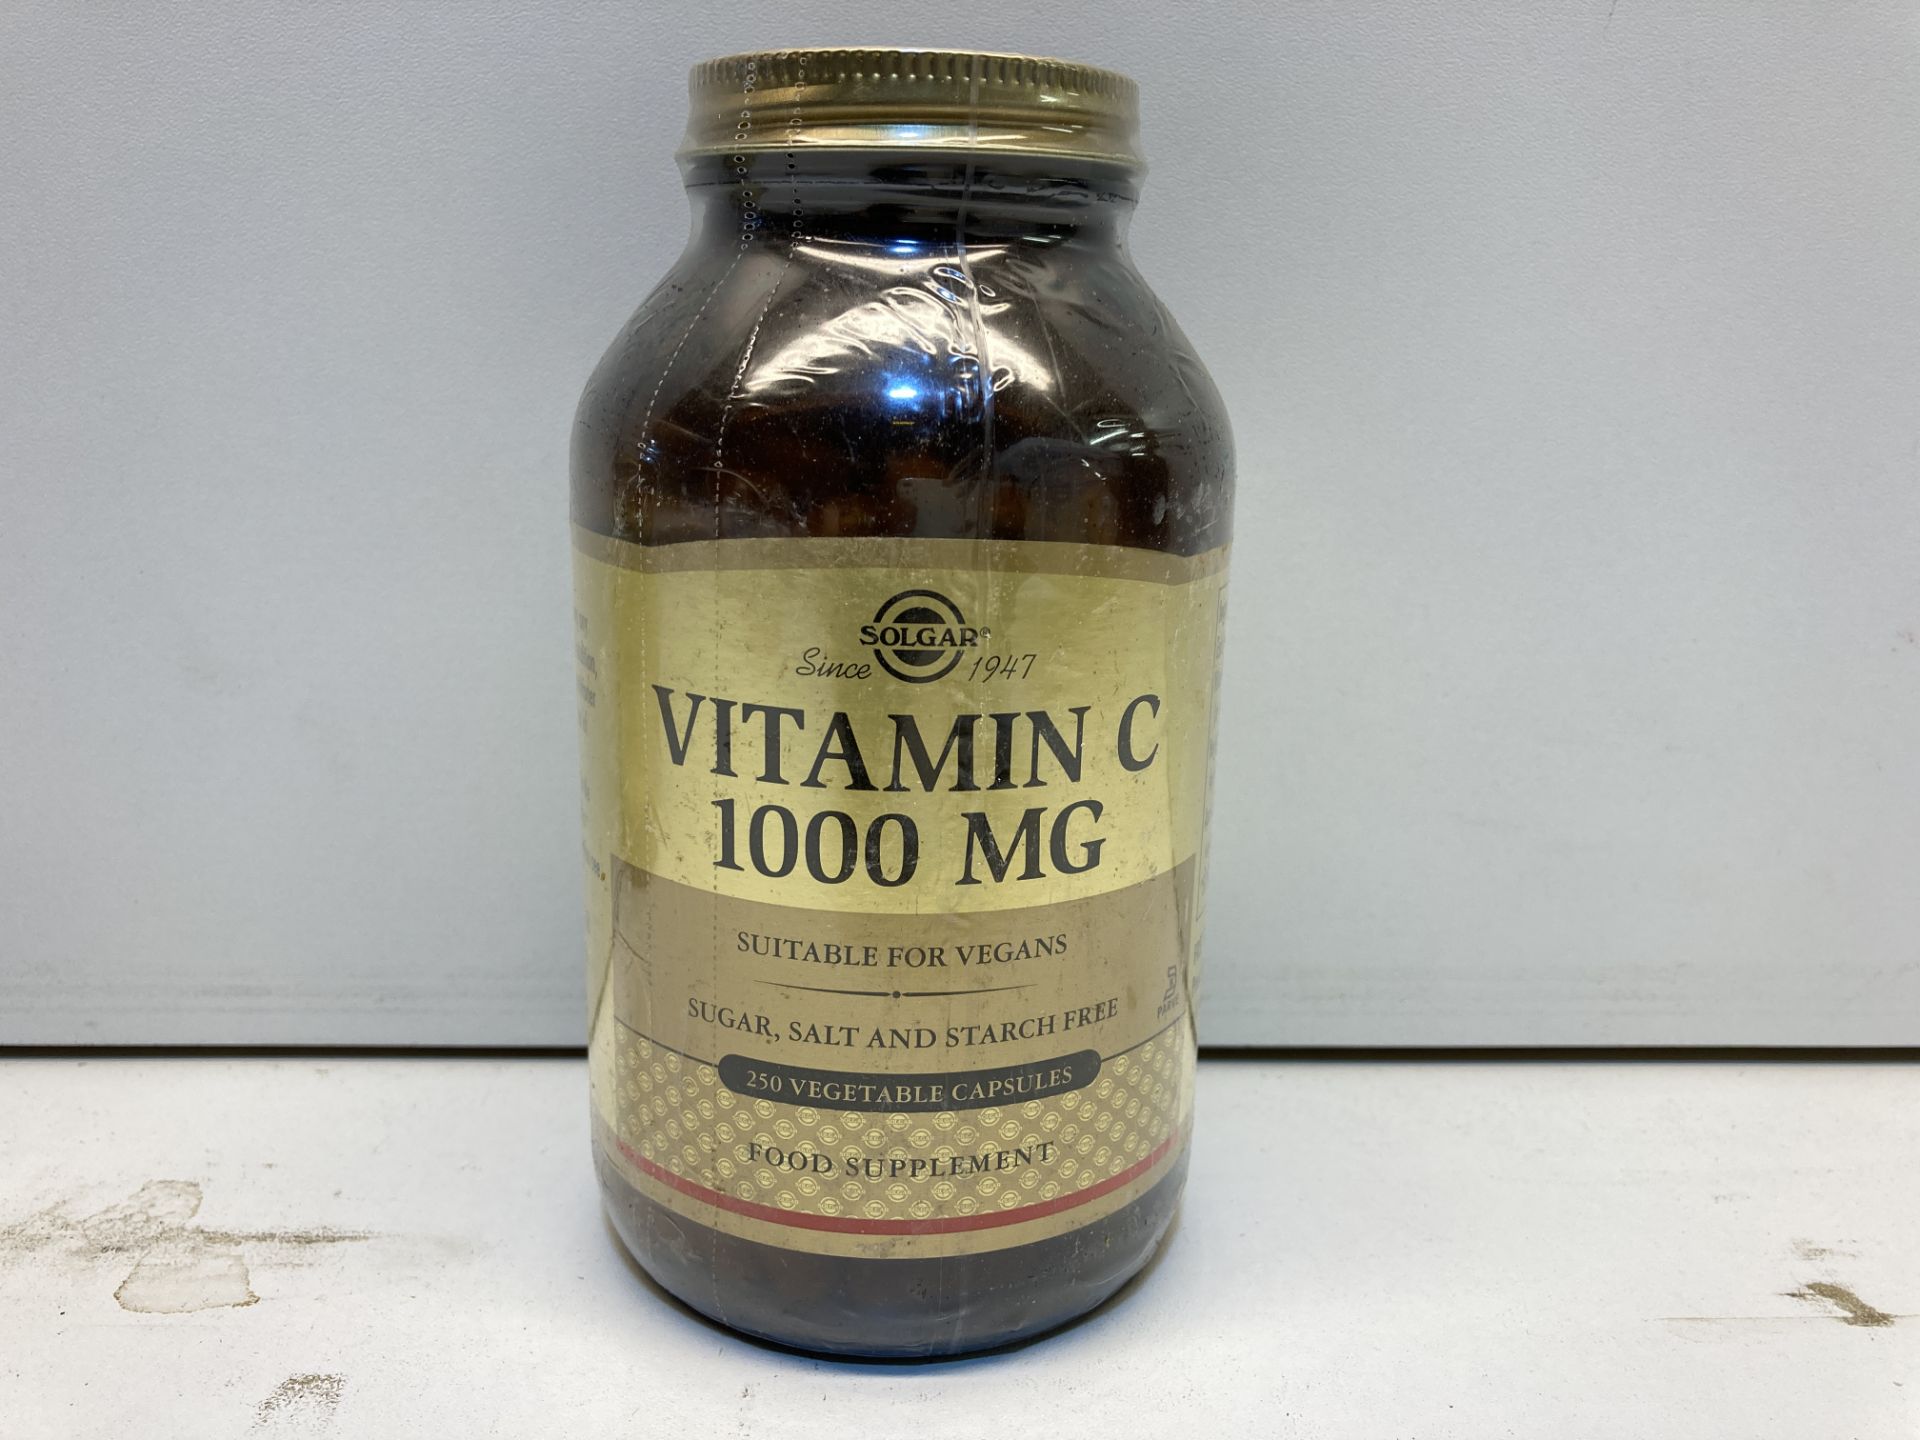 23 x Bottles of Vitamin C 1000mg Vegetable Capsules As Per Description | Total RRP £520 - Image 2 of 3